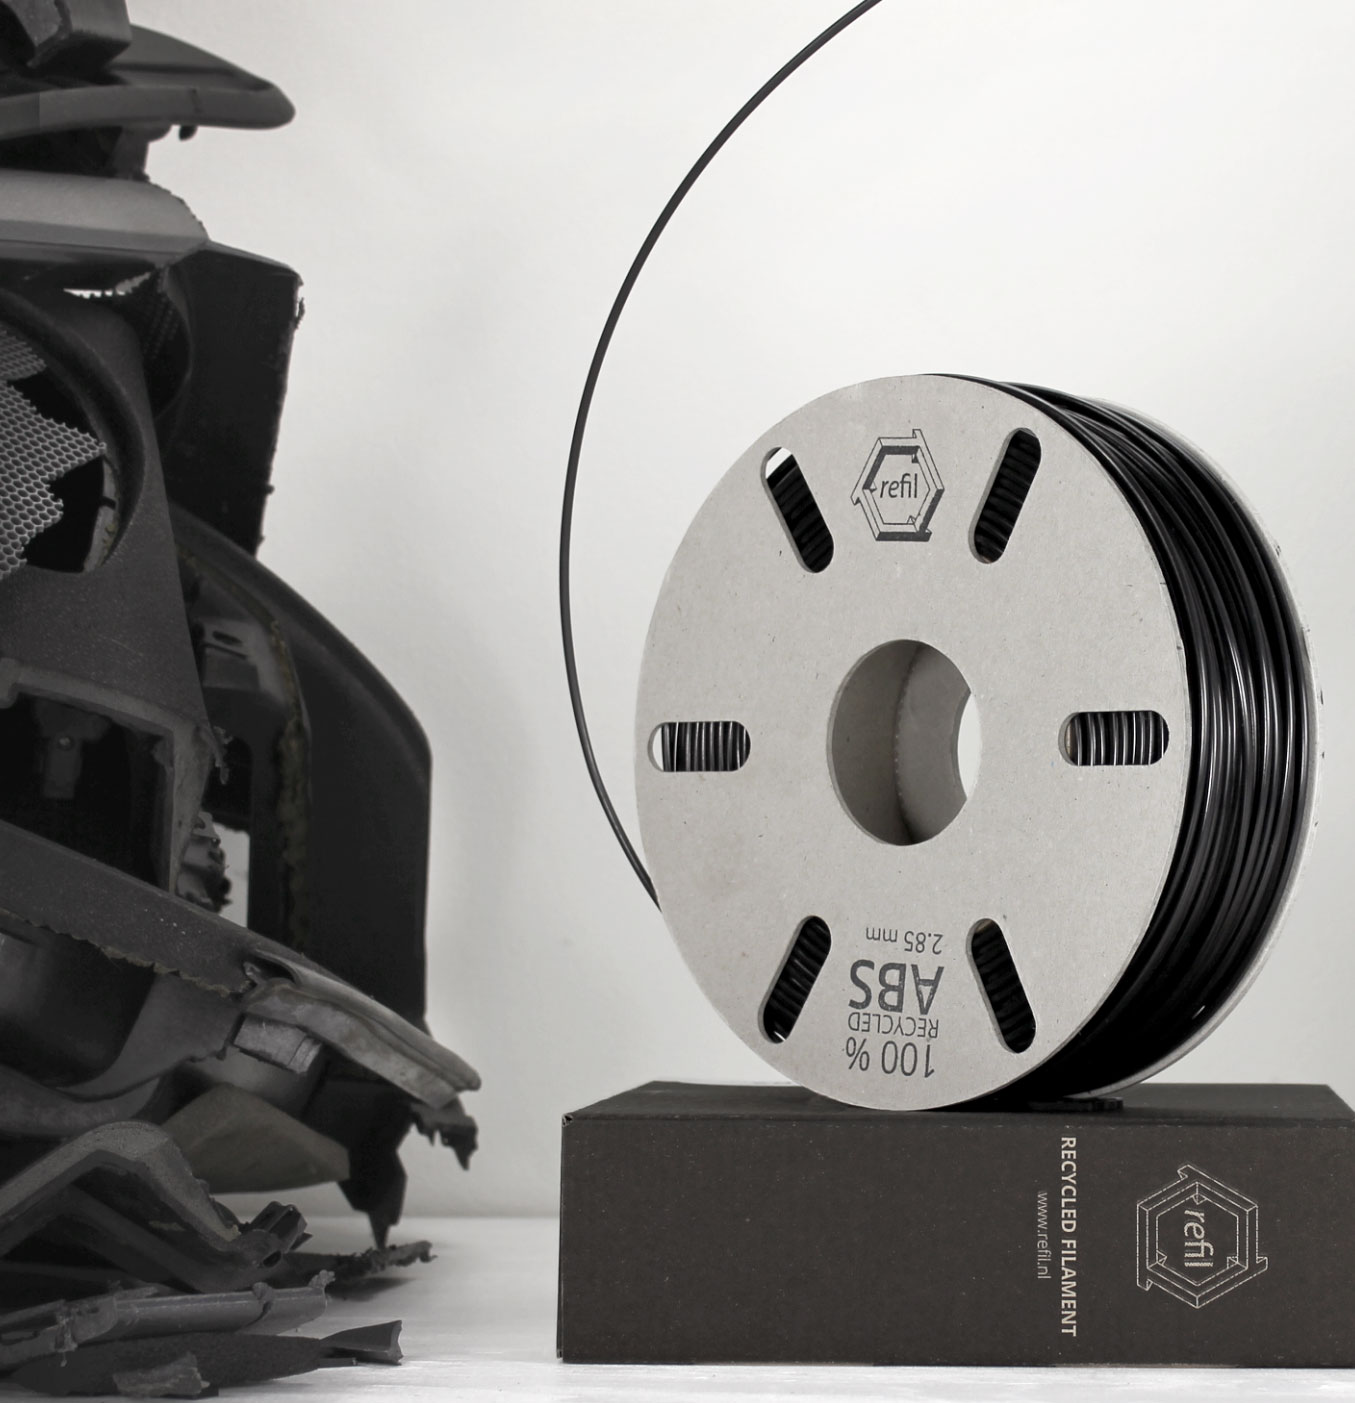 Refil – Recycled 3D print filament